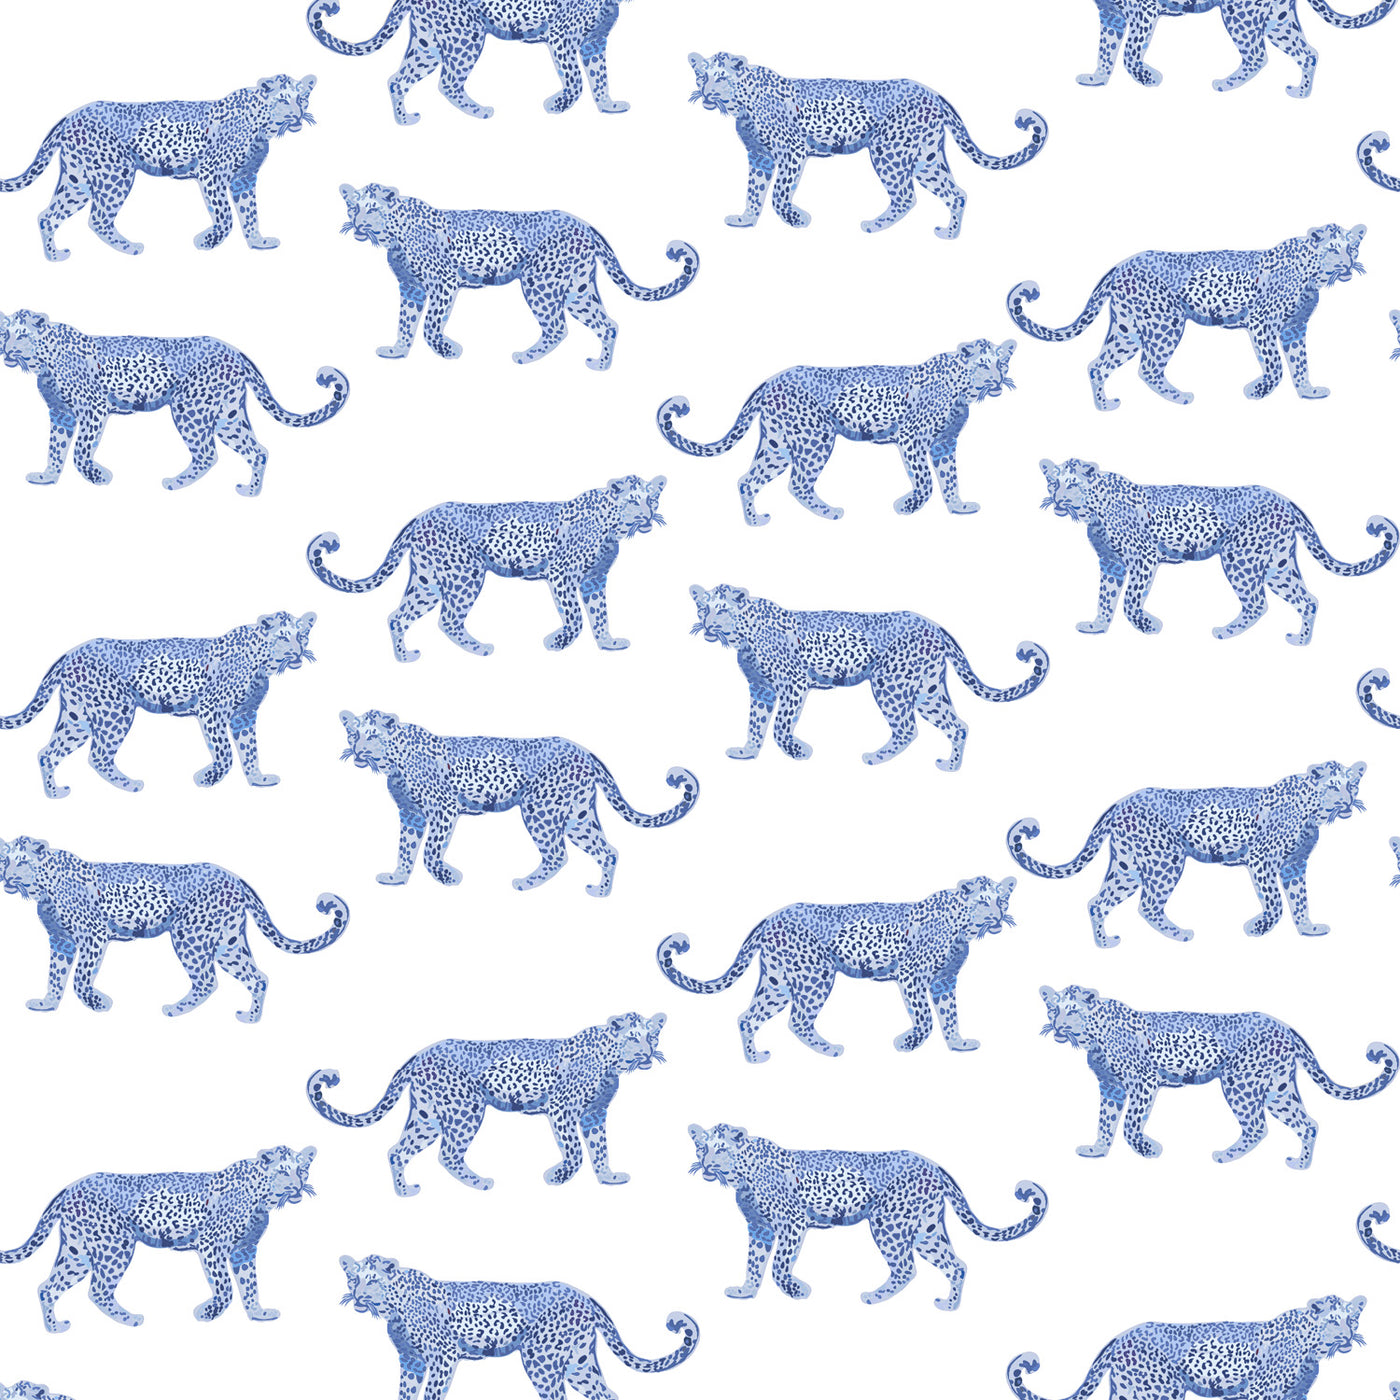 Cheetahs Wallpaper Katie Kime Design